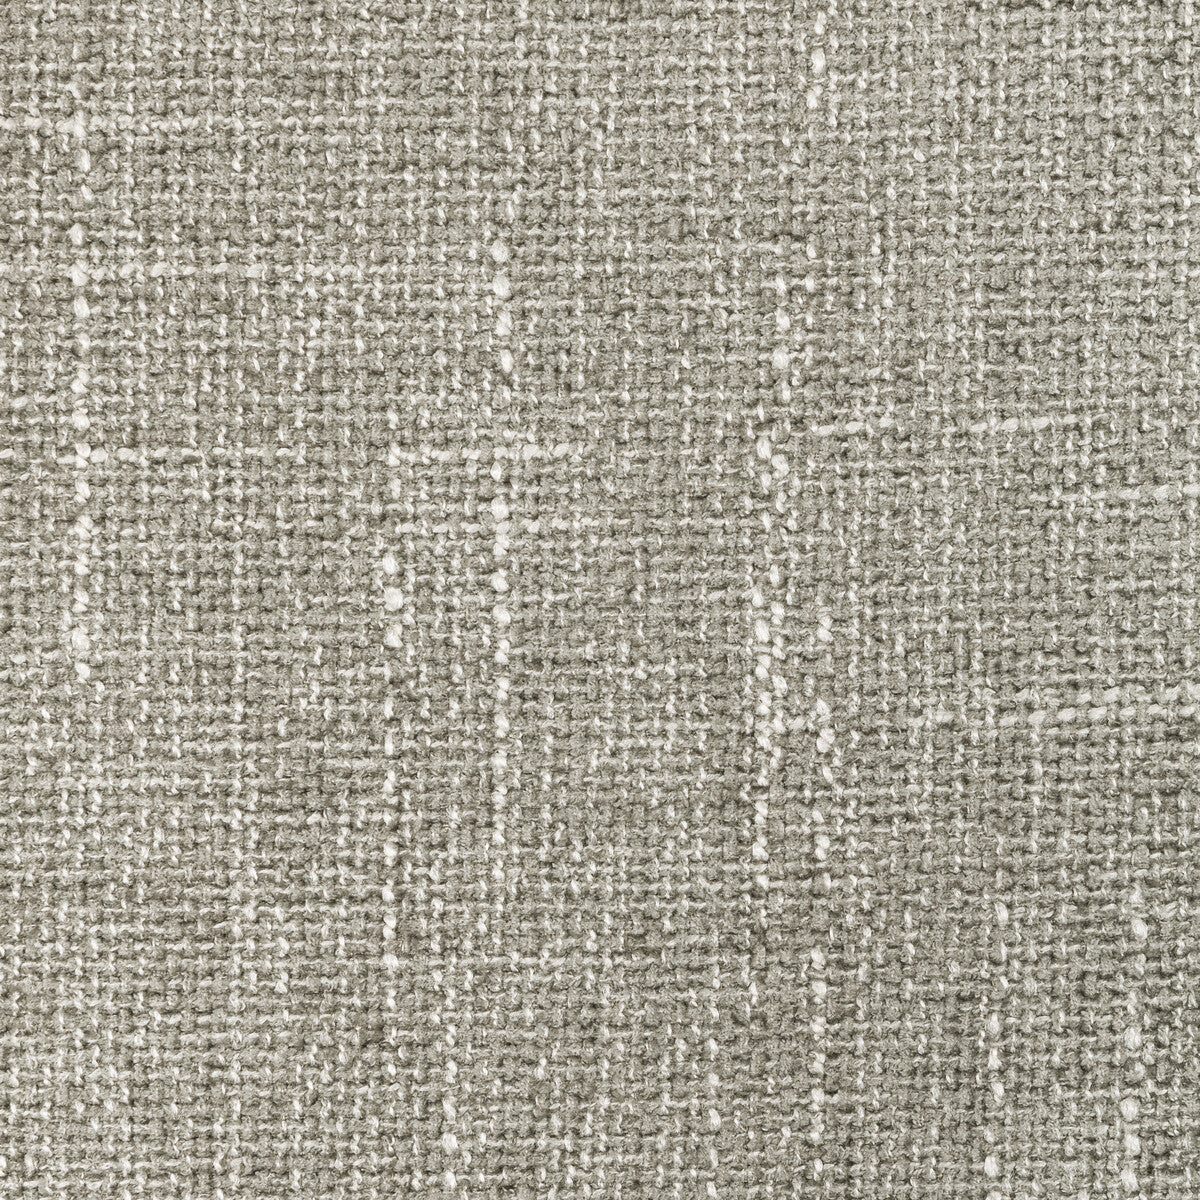 Kravet Smart fabric in 36579-52 color - pattern 36579.52.0 - by Kravet Smart in the Performance Kravetarmor collection